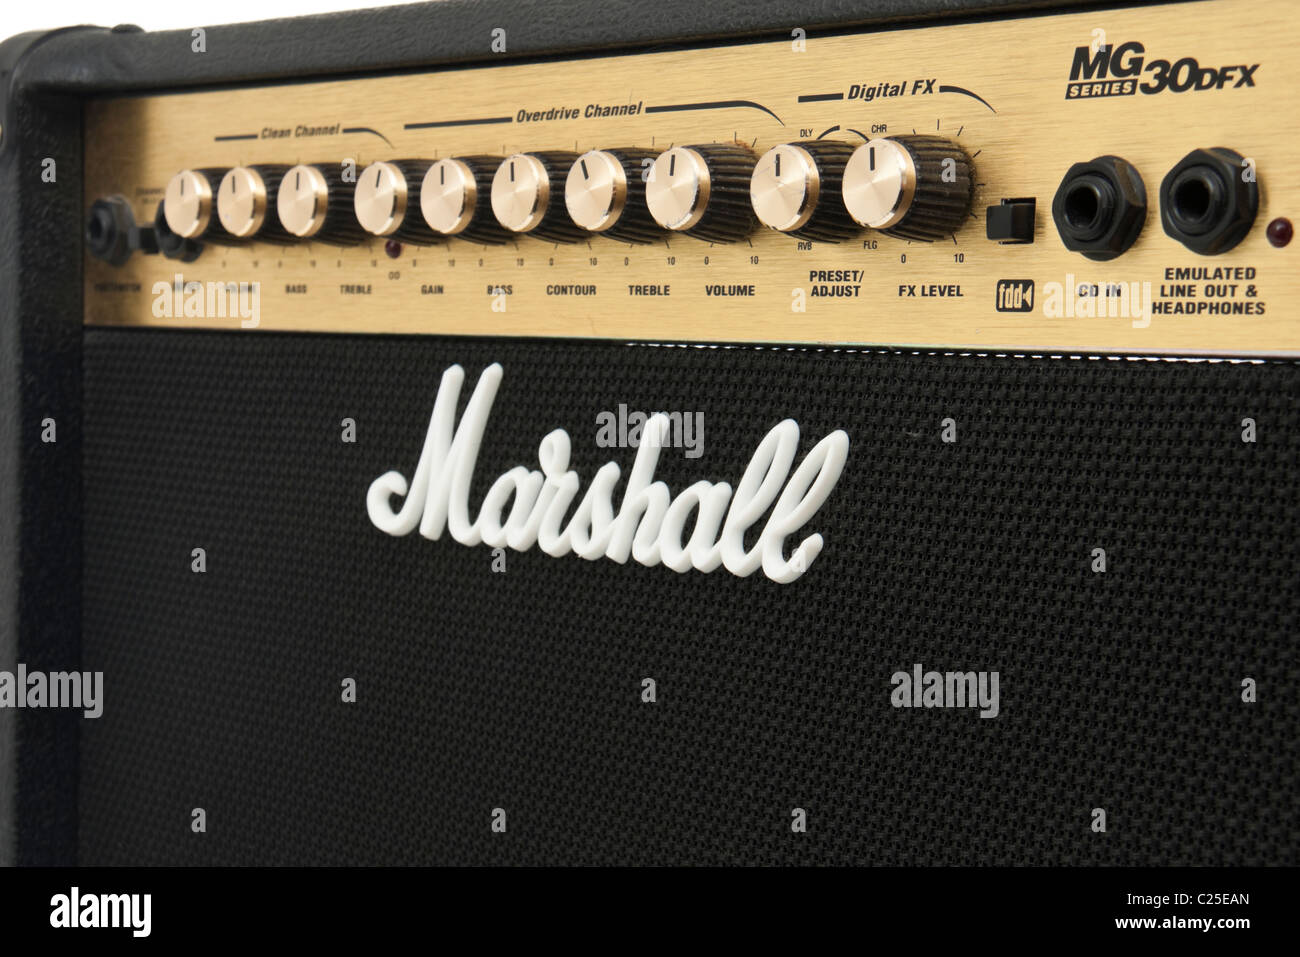 Marshall MG-series 30DFX ampli guitare électrique Photo Stock - Alamy